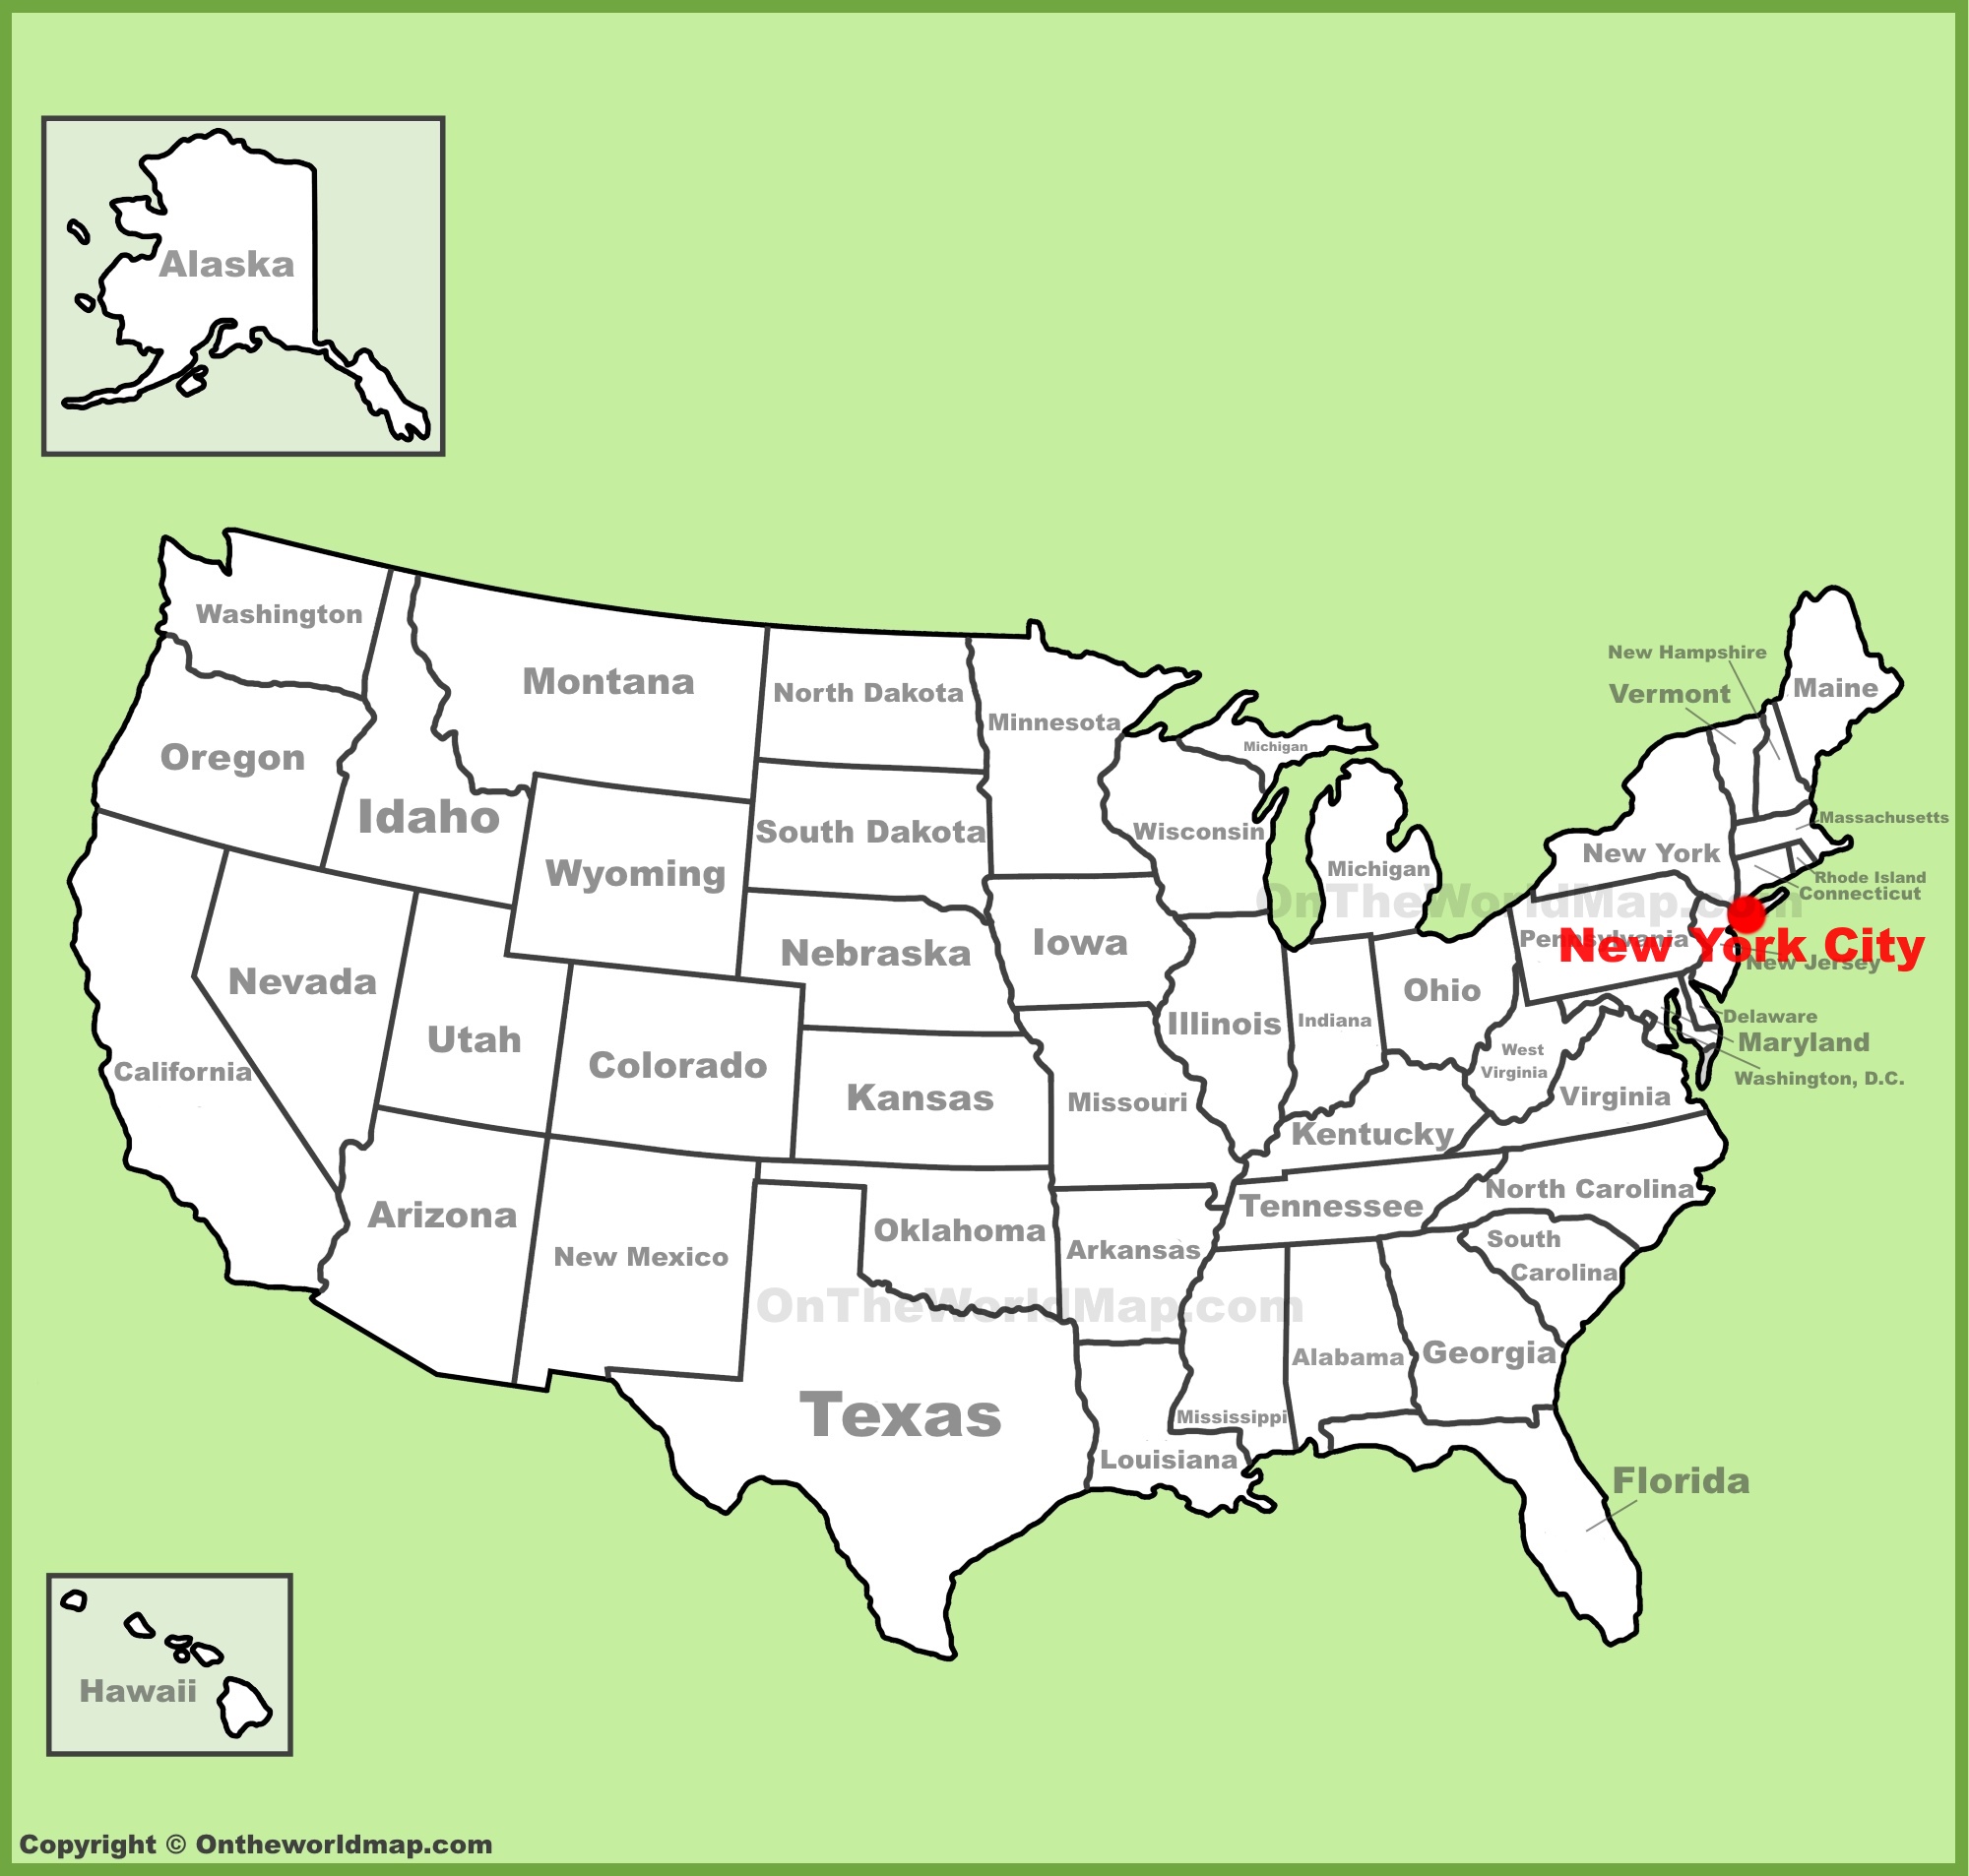 New York City Location On The U S Map